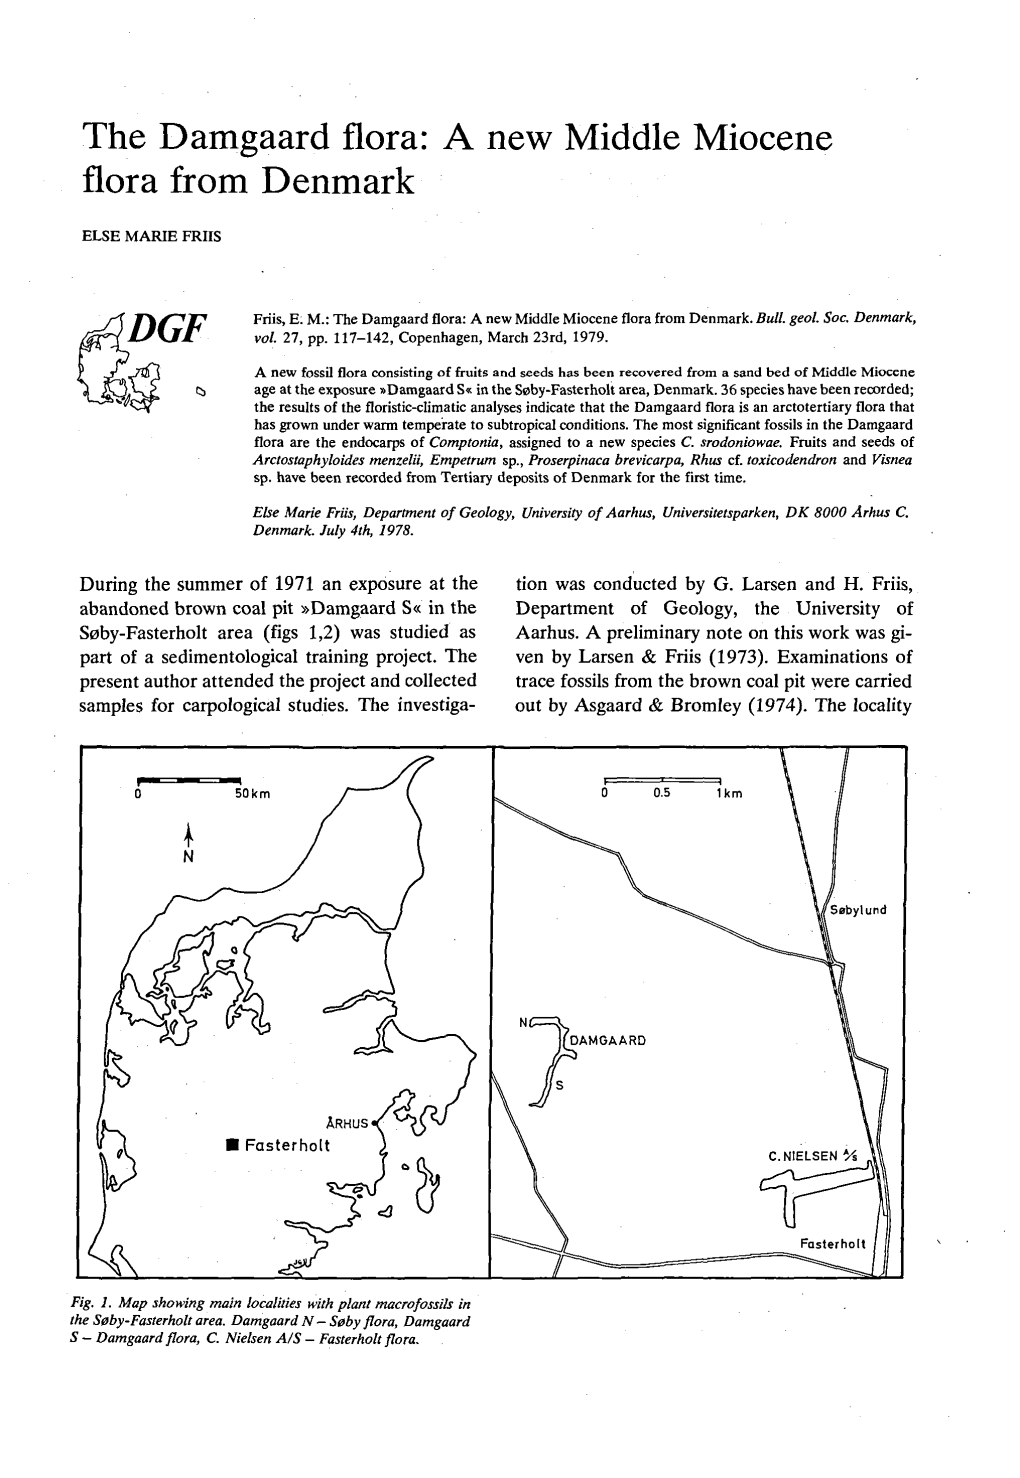 Bulletin of the Geological Society of Denmark, Vol. 27/03-04, Pp. 117